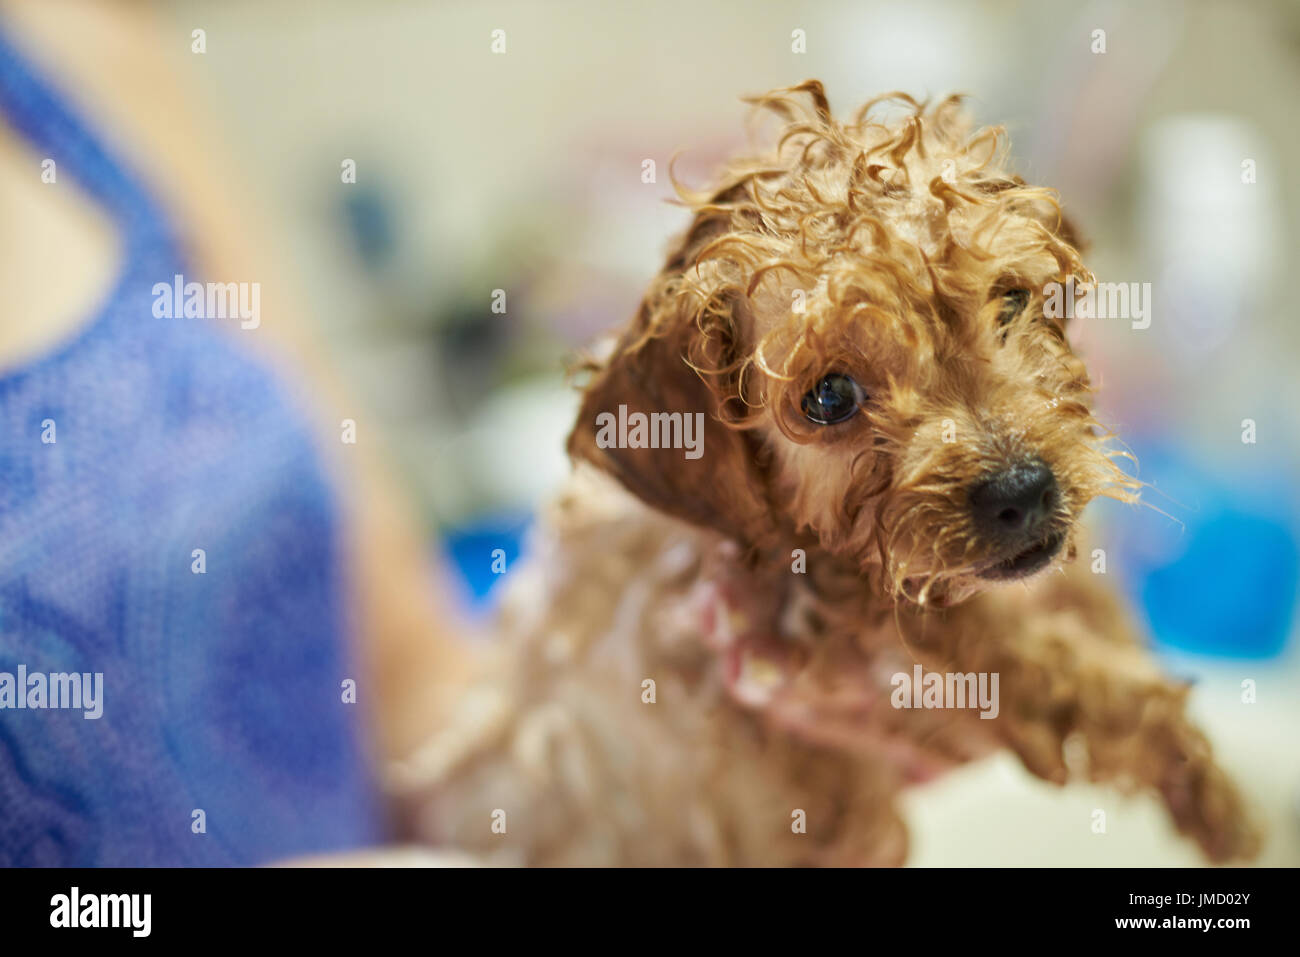 Funny wet poodle puppy dog close-up. Dog groomer service theme Stock Photo